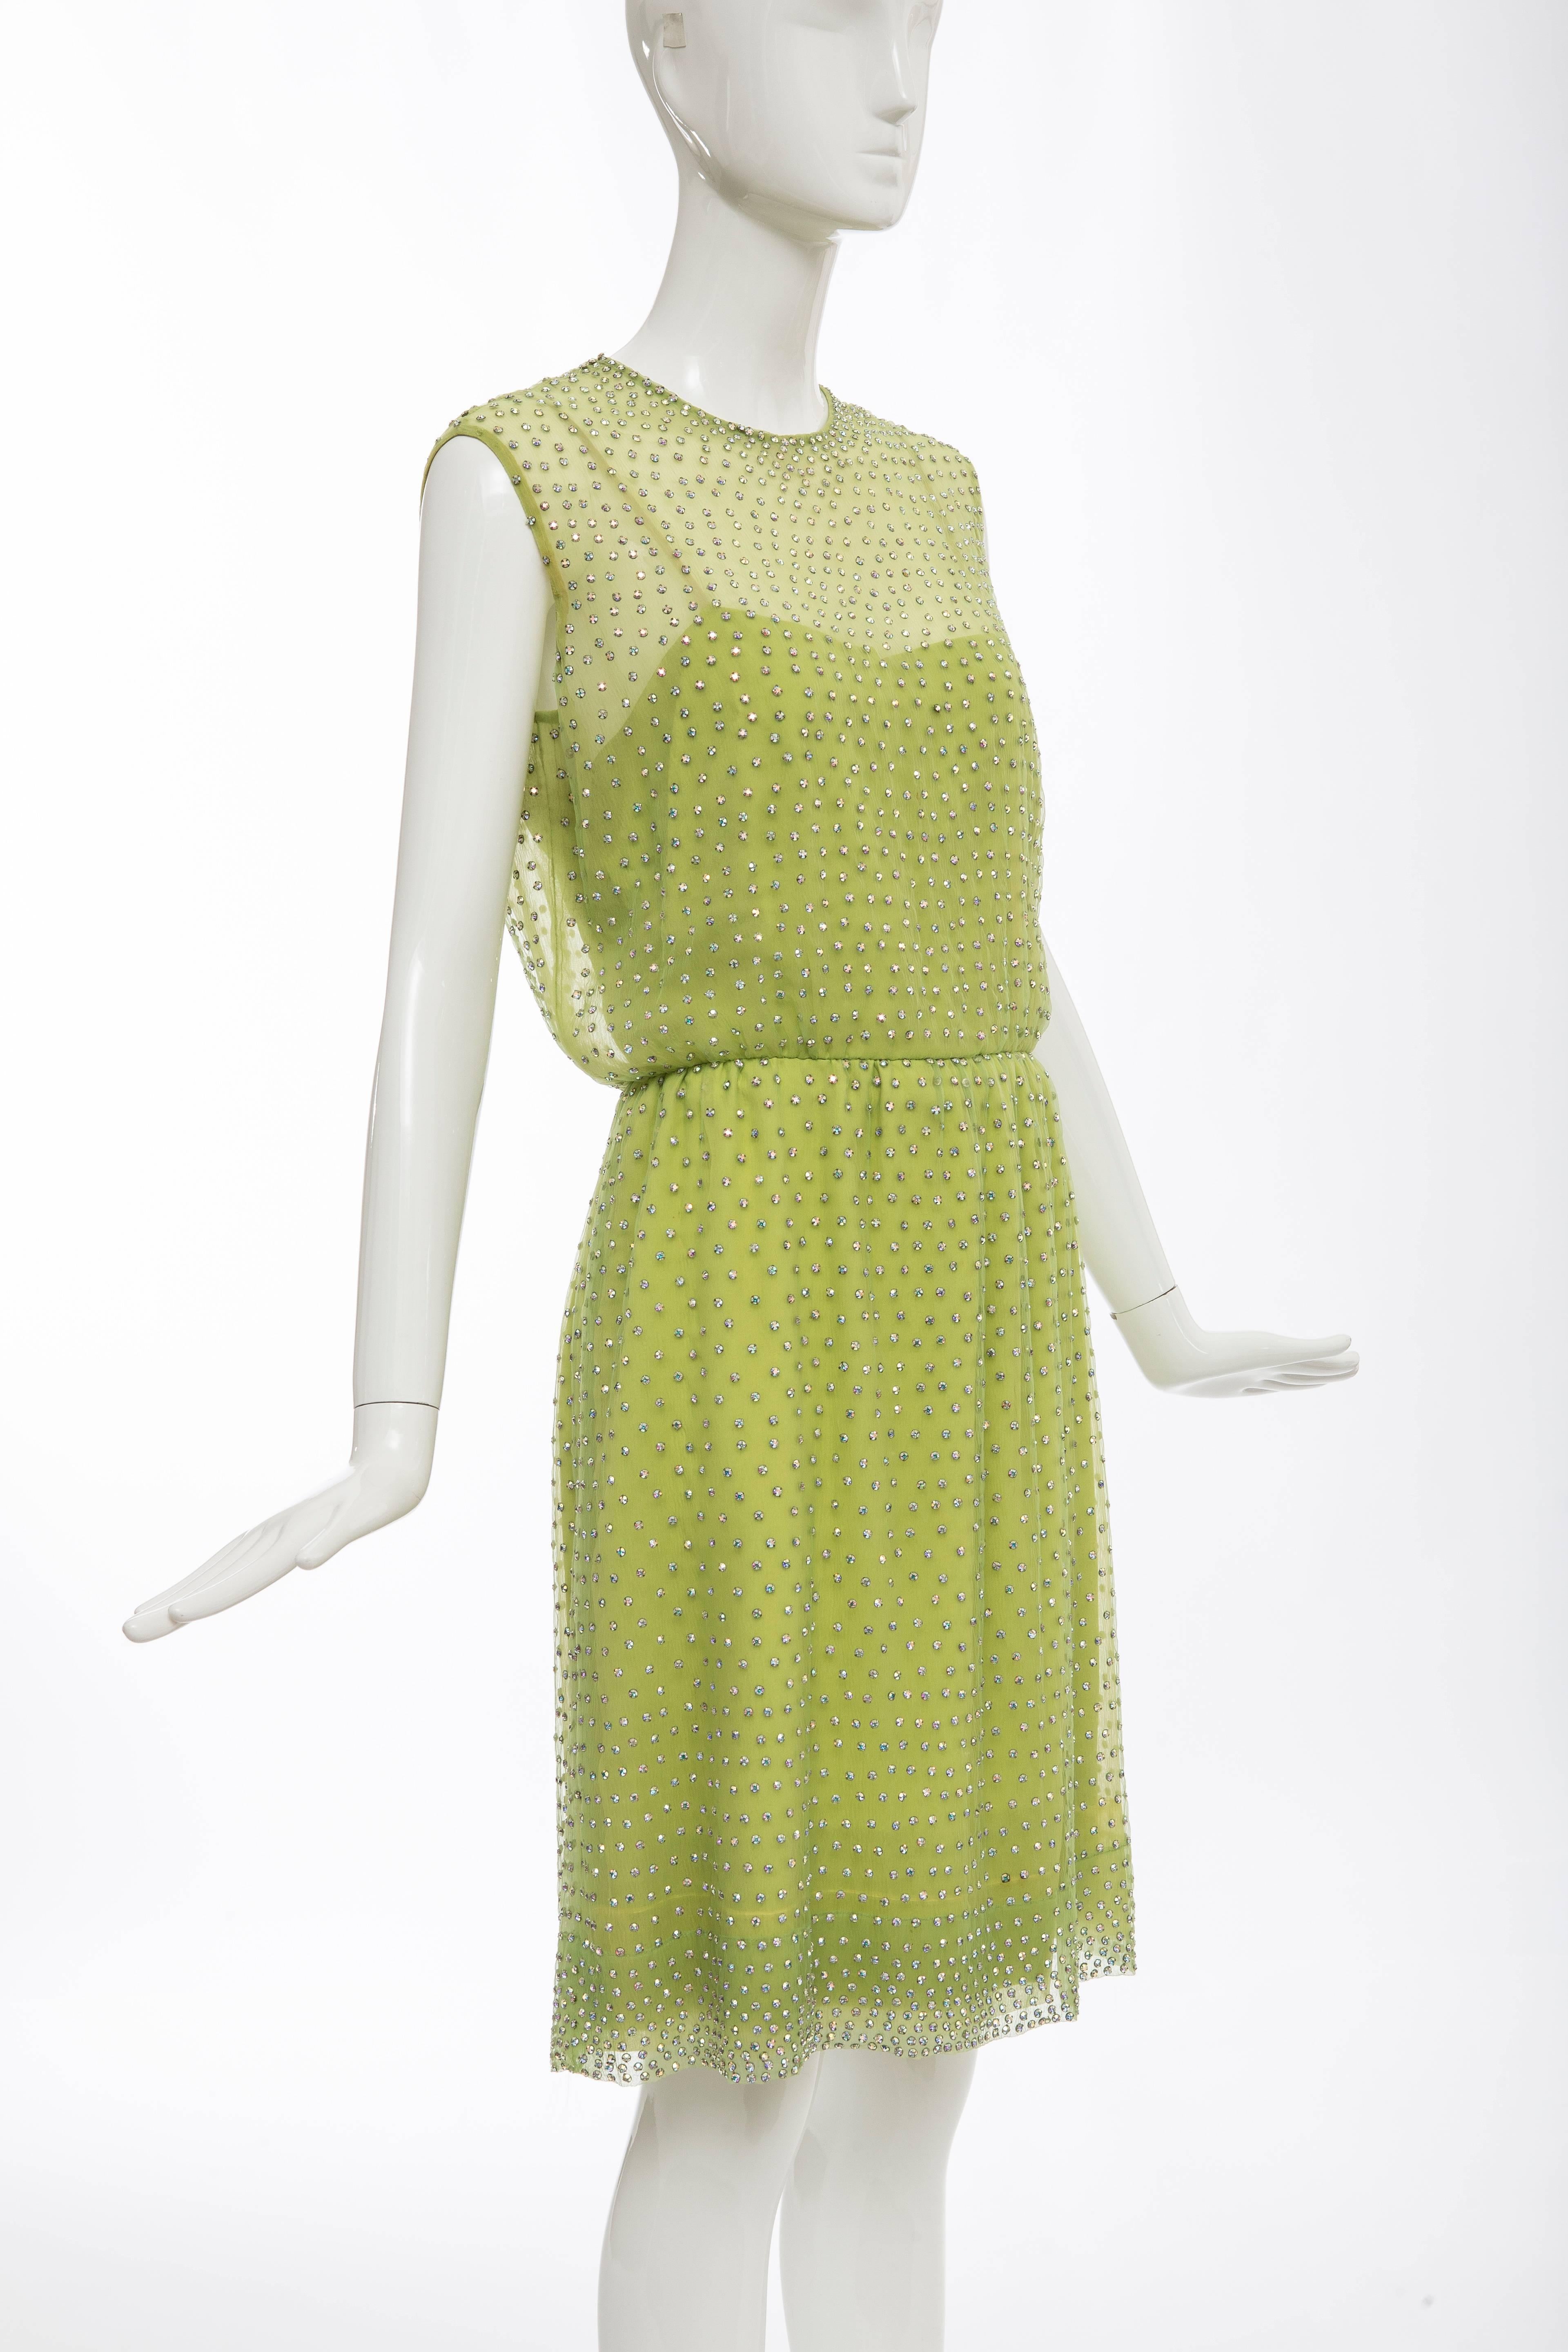 Women's Harvey Berin designed by Karen Stark Silk Dress Prong Set Crystals, Circa 1960's For Sale